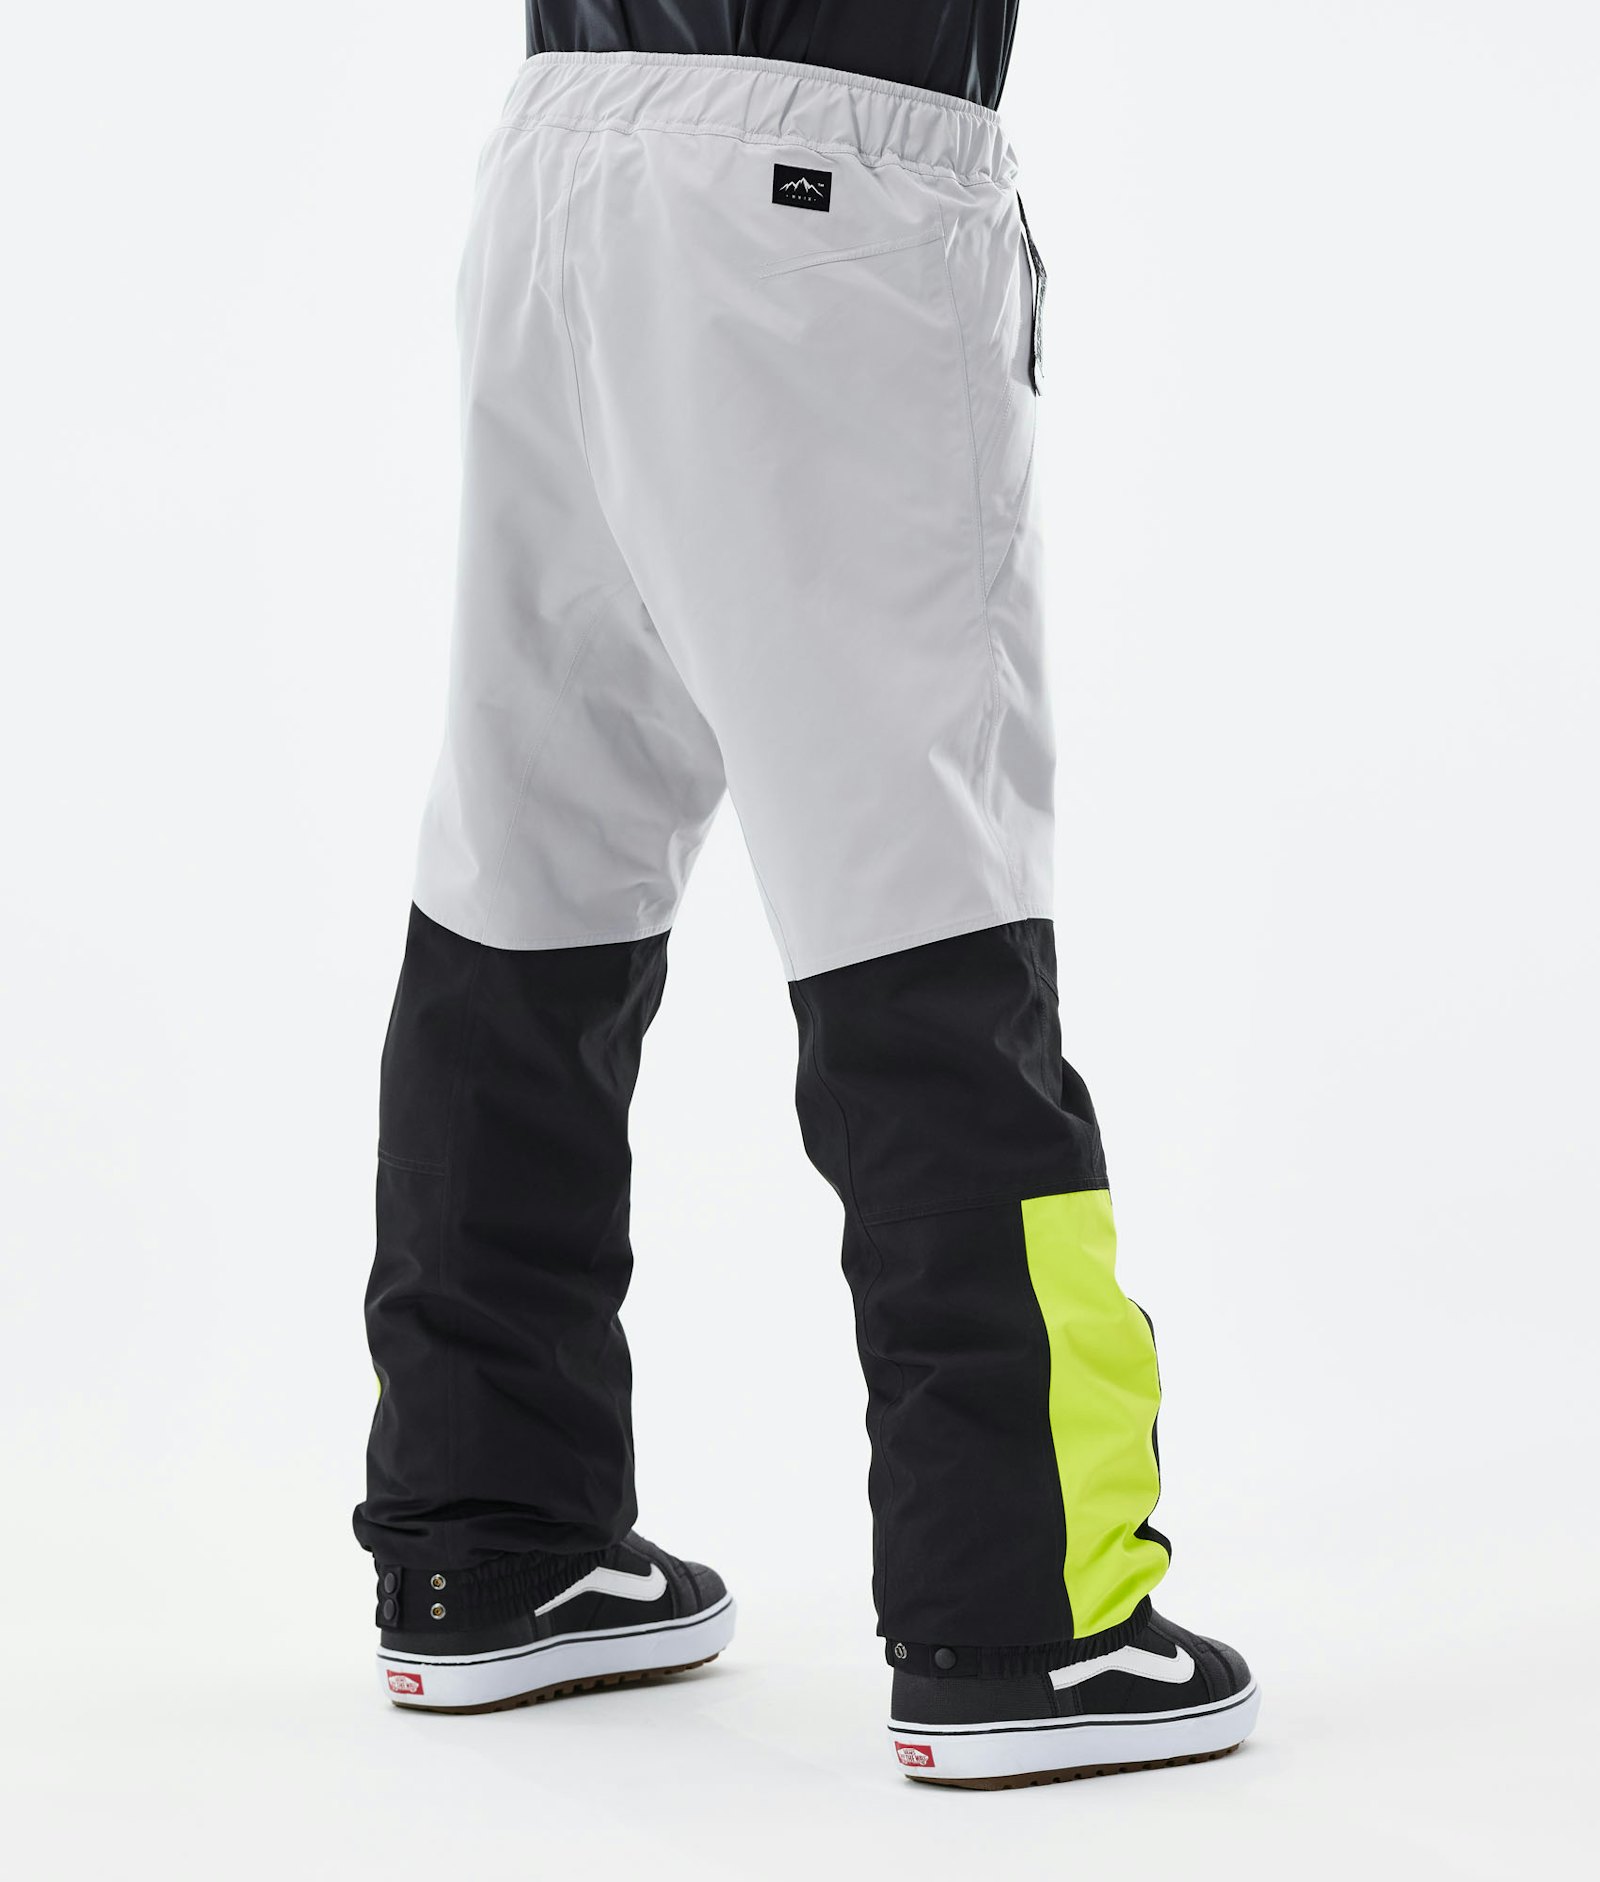 Blizzard LE Snowboard Pants Men Limited Edition Multicolor Light Grey